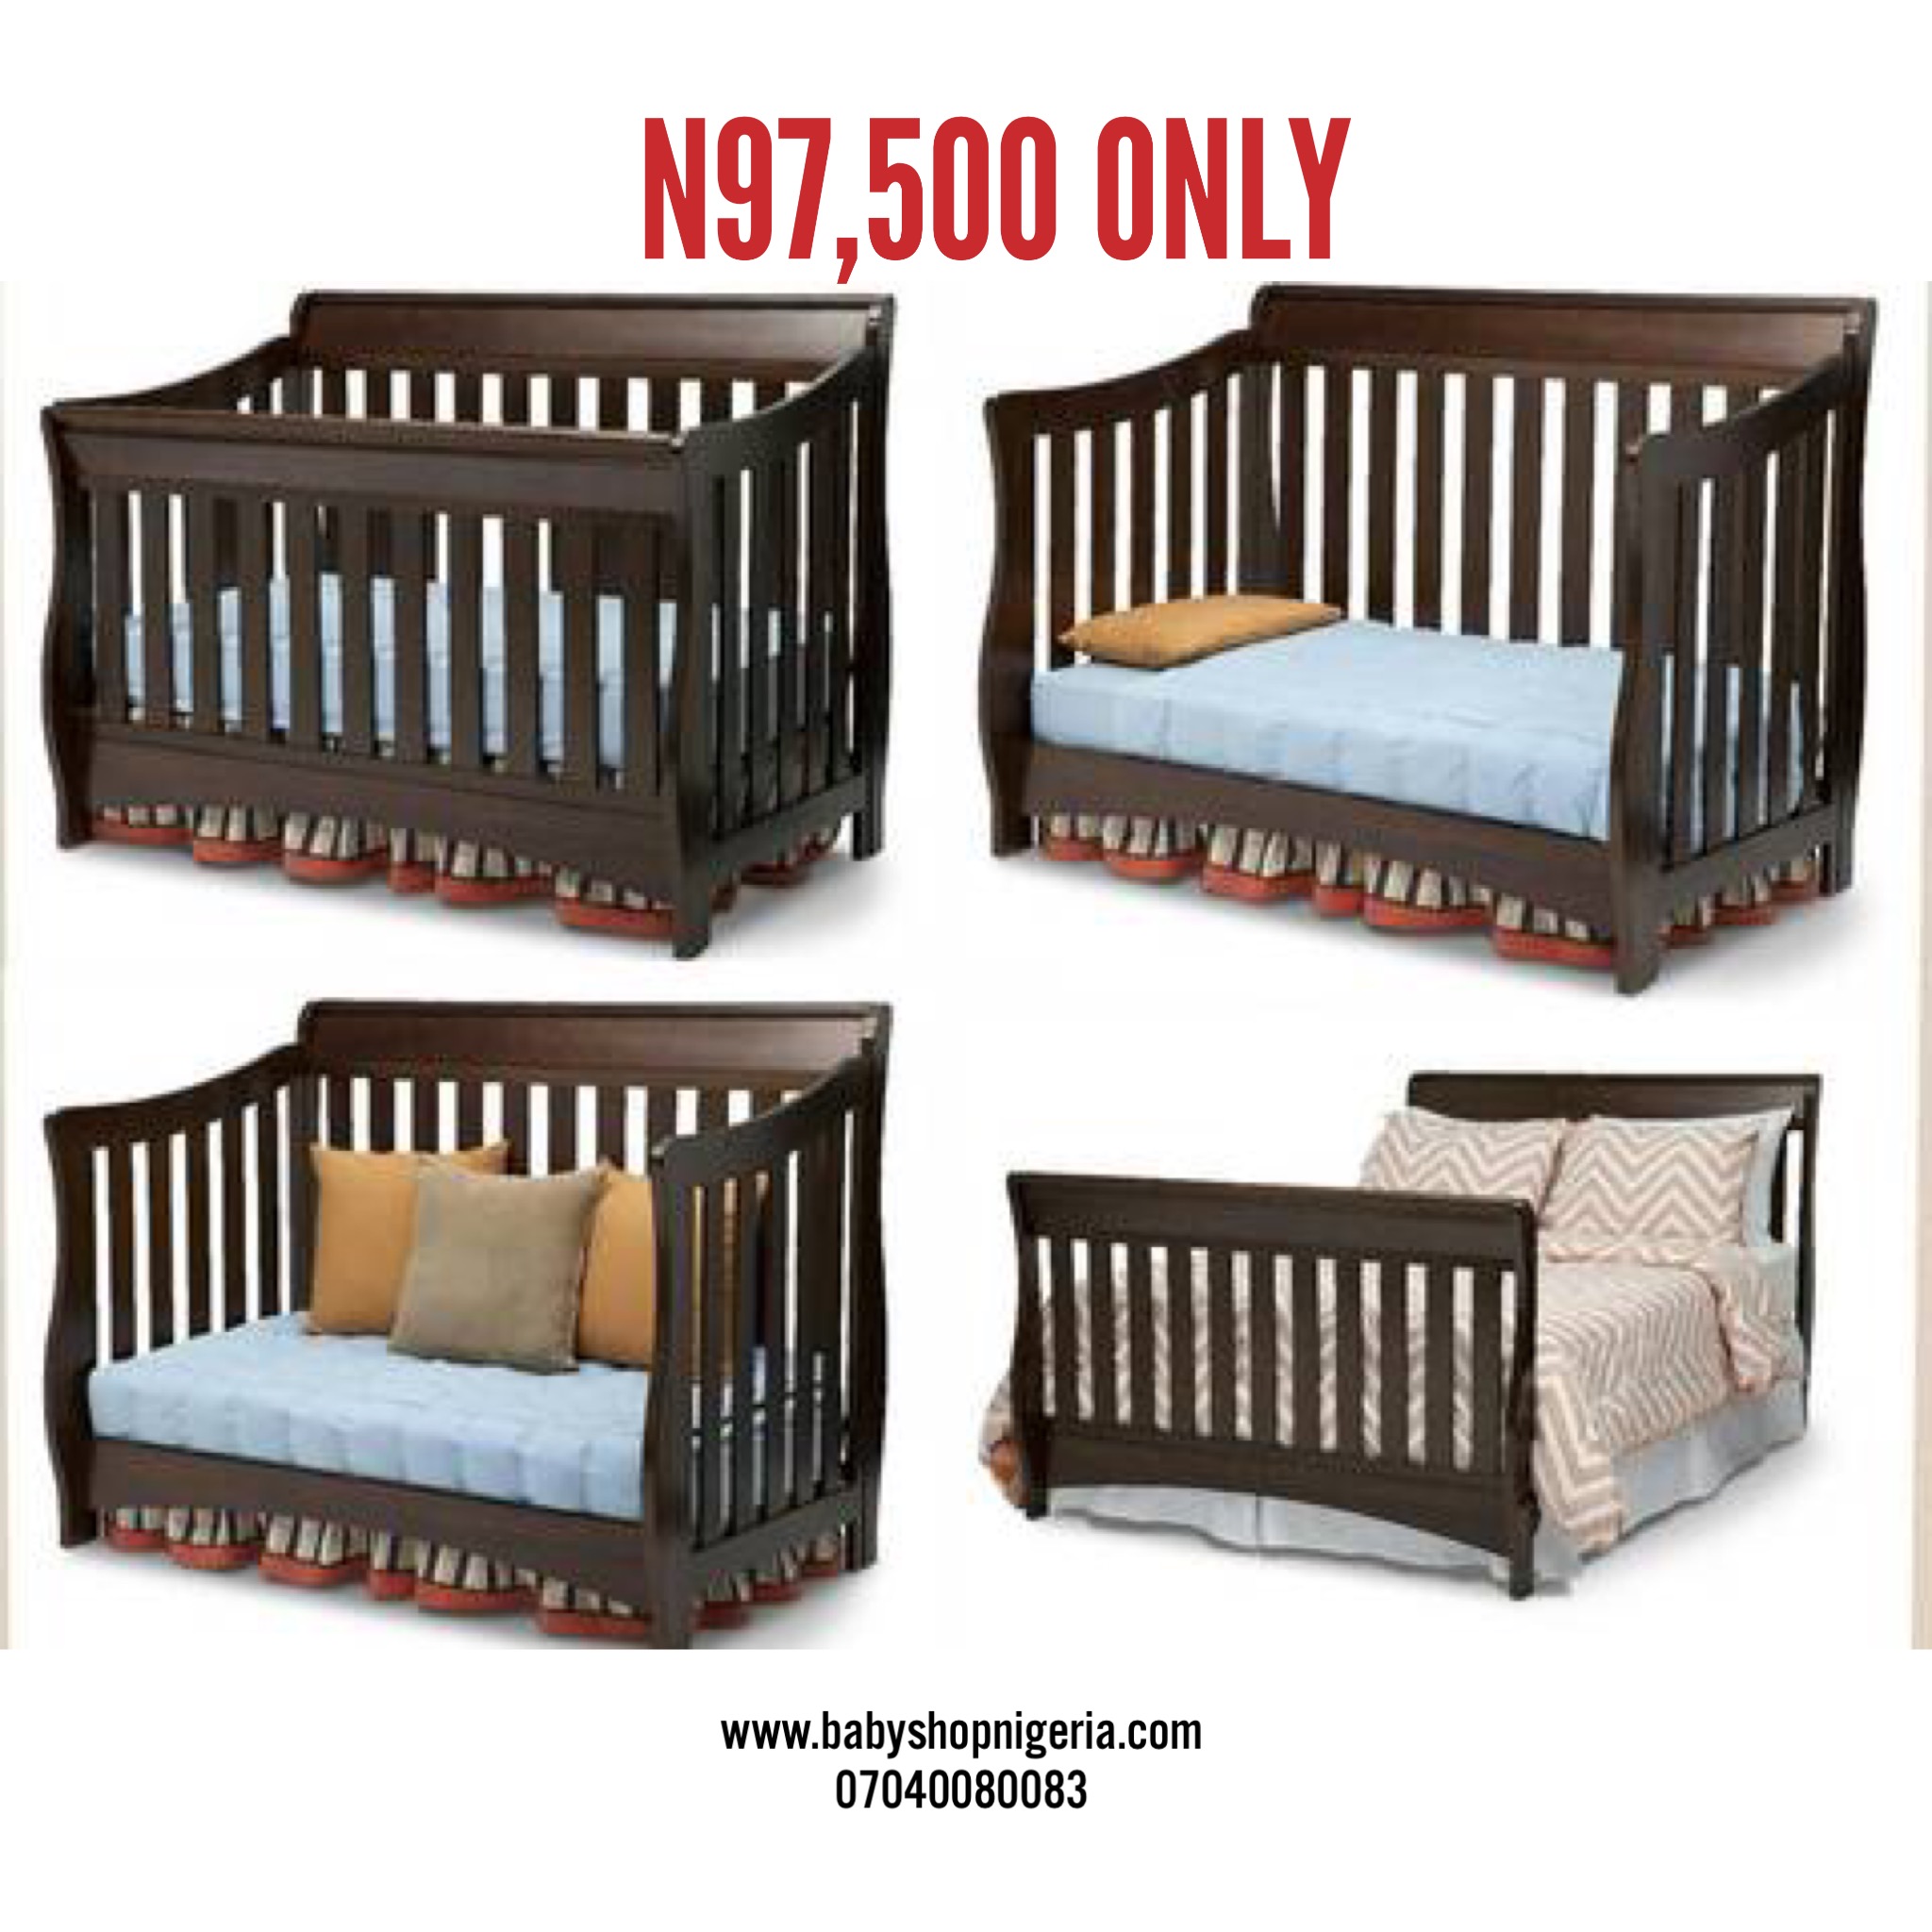 graco baby cribs